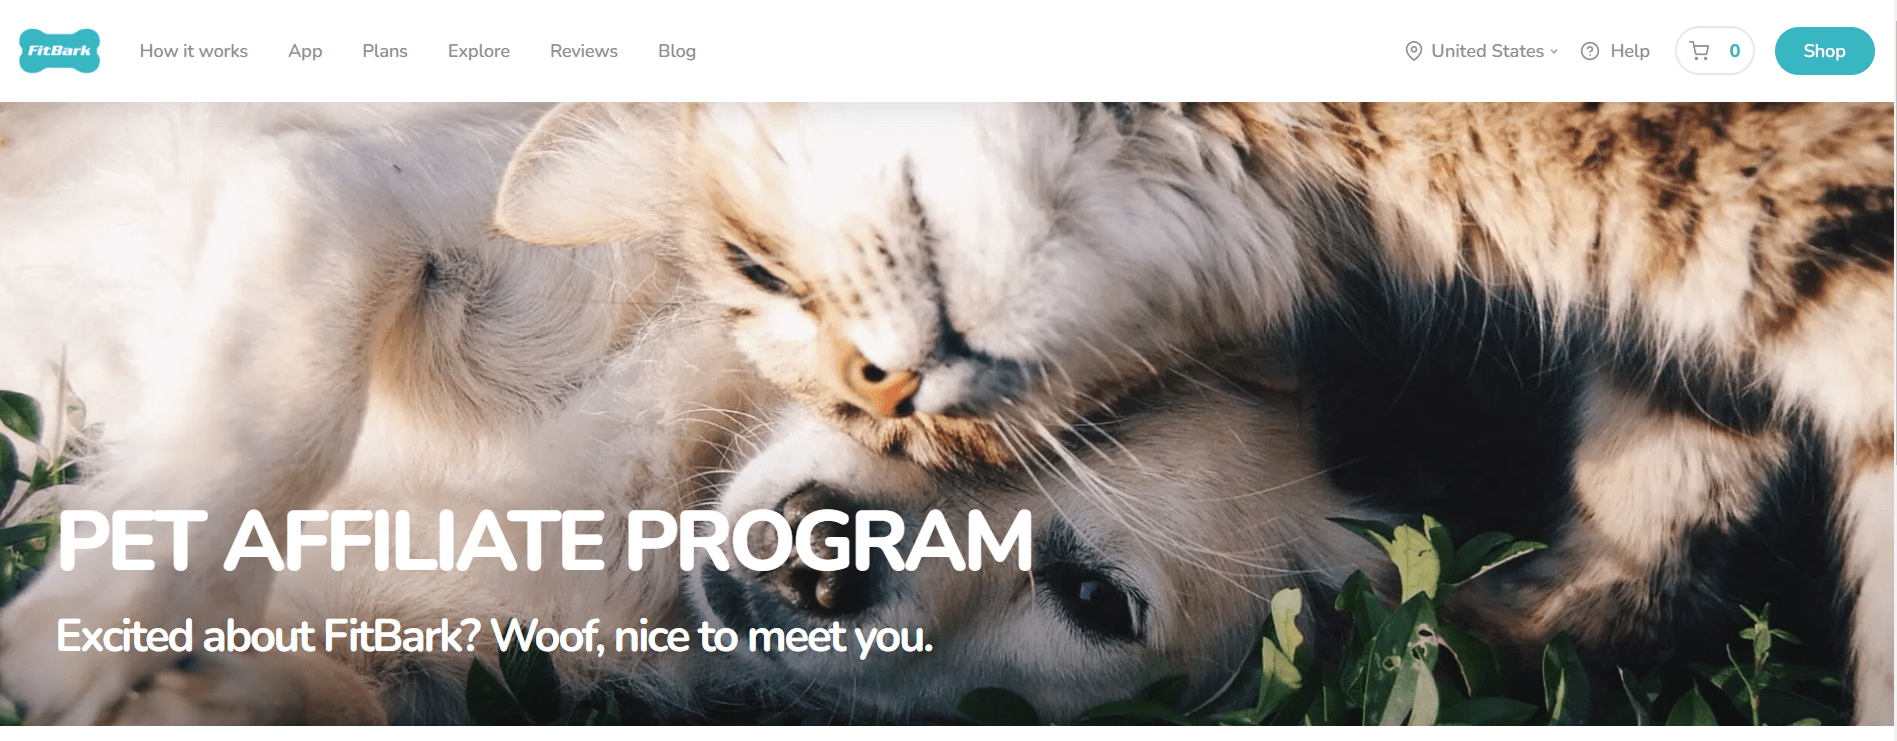 FitBark- Best Pet Affiliate Programs